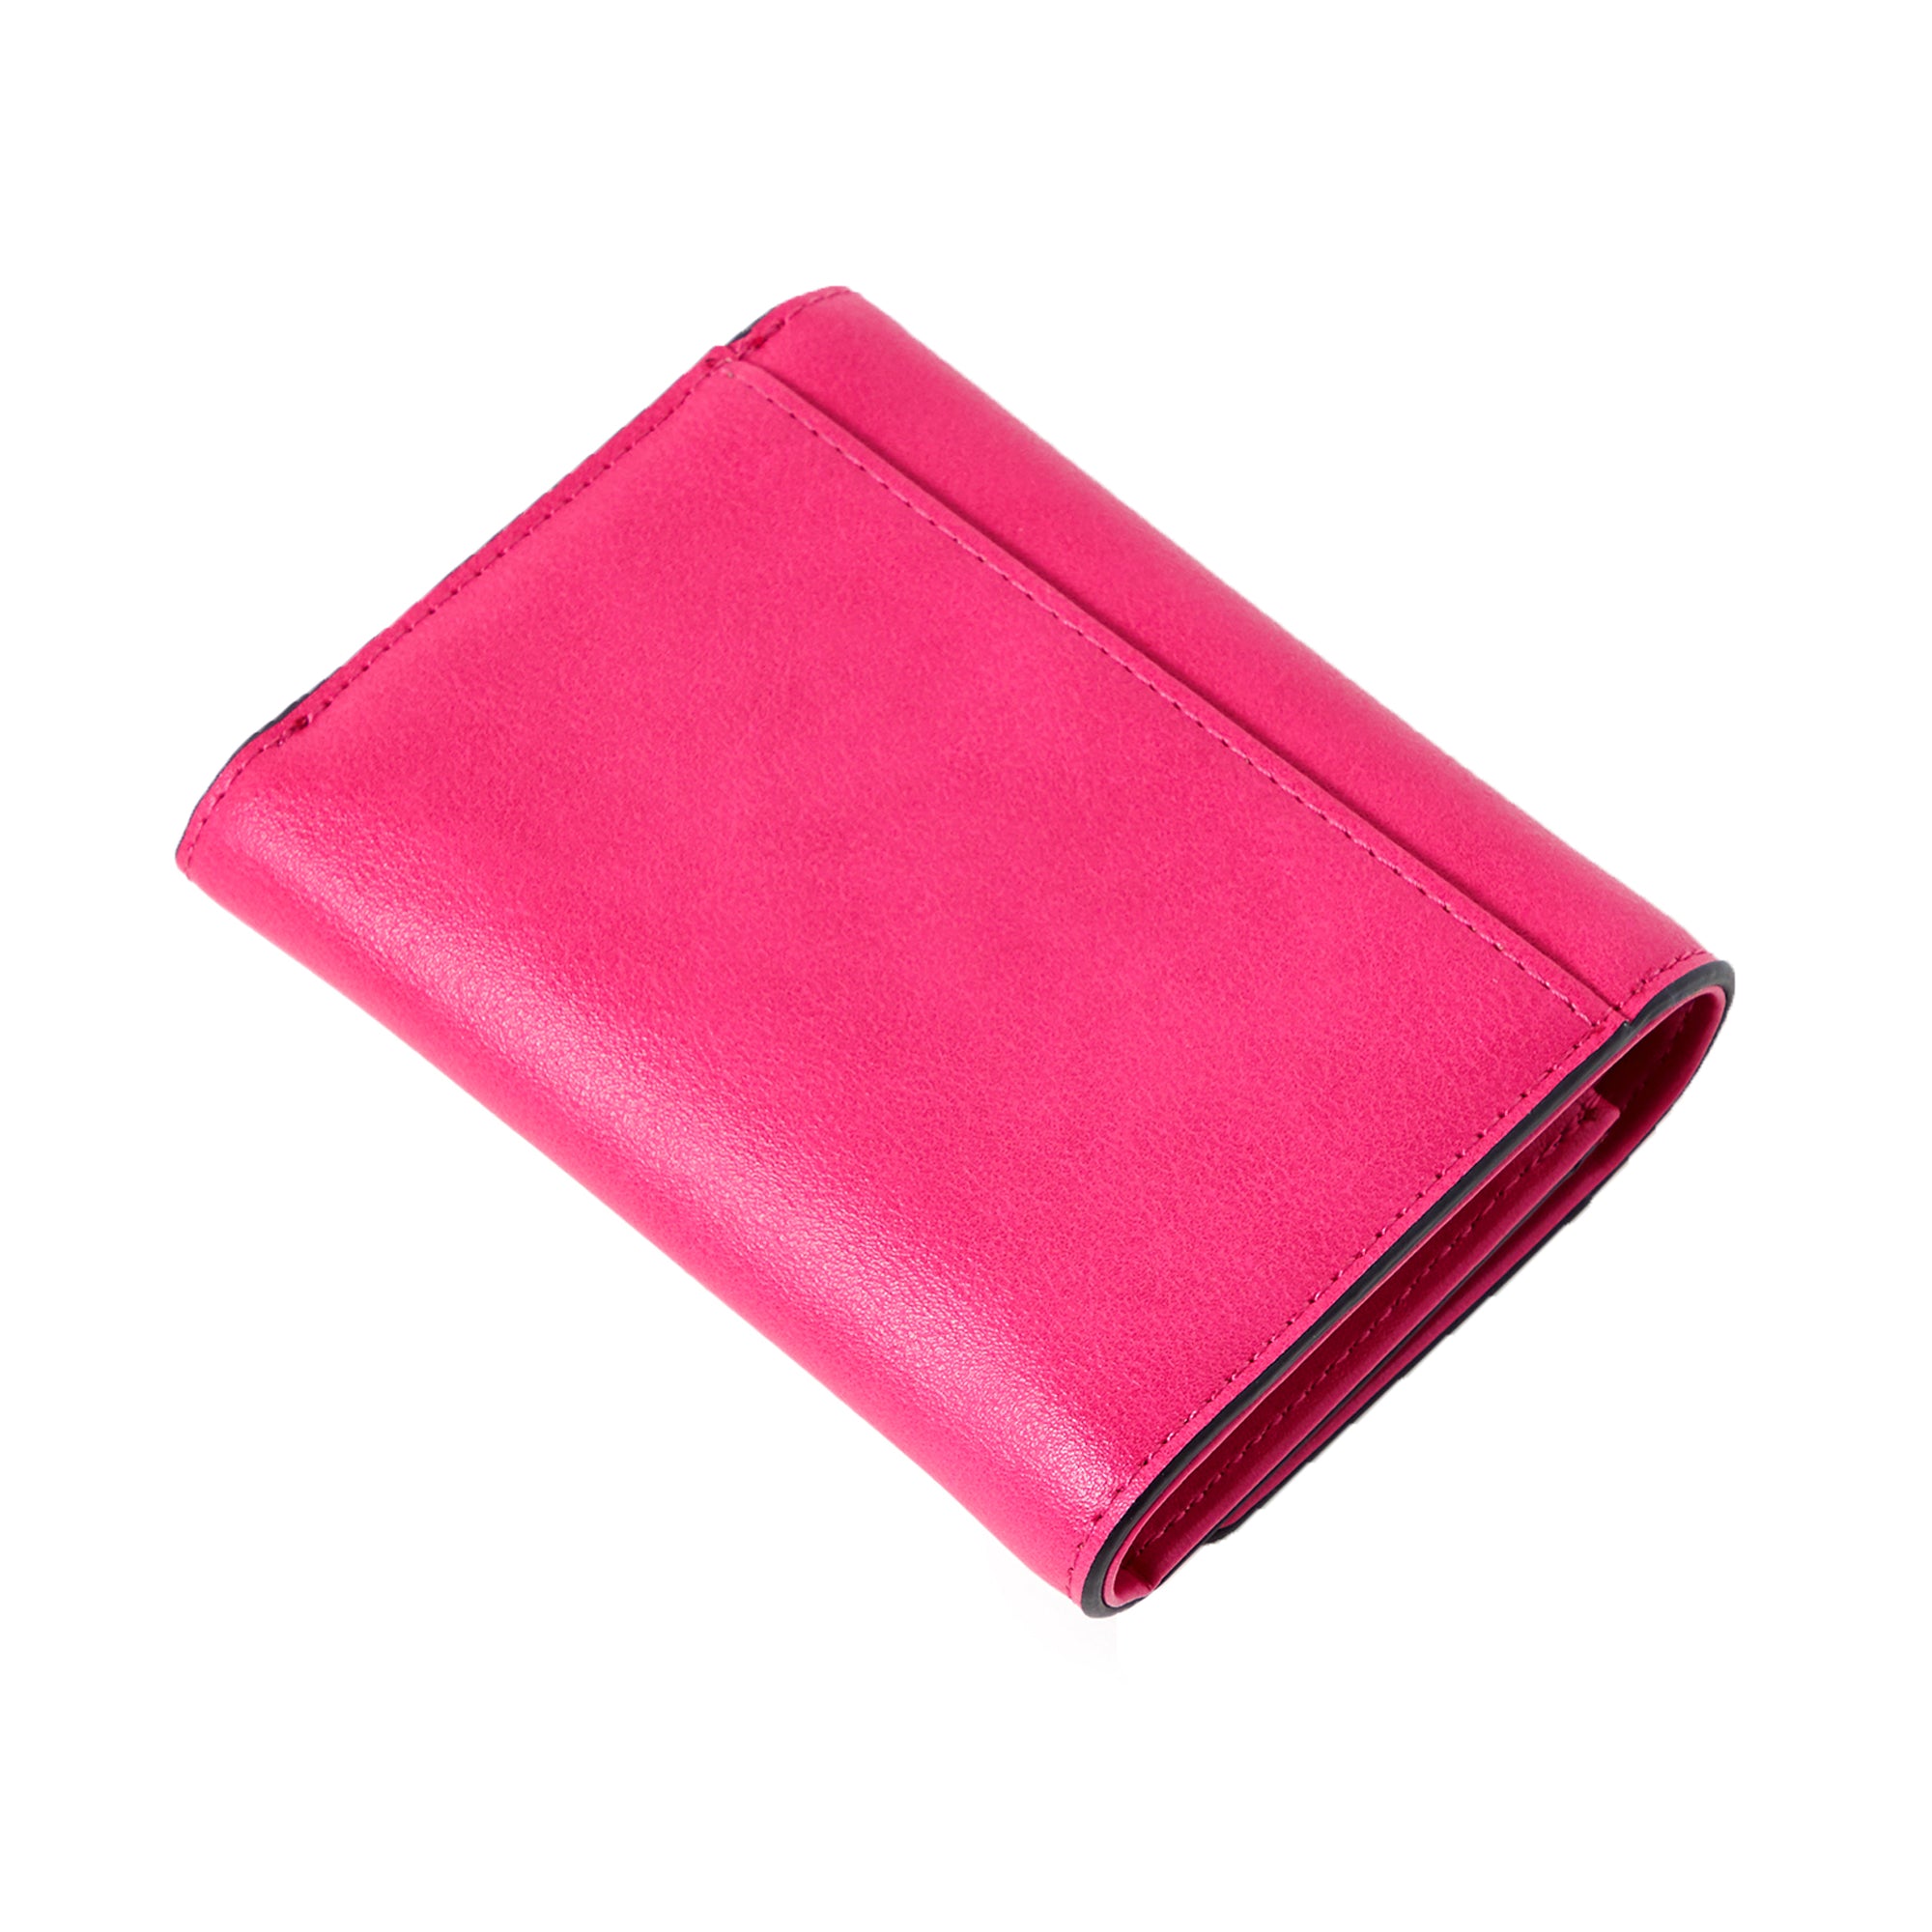 Accessorize London Women's Faux Leather Pink Stella Purse